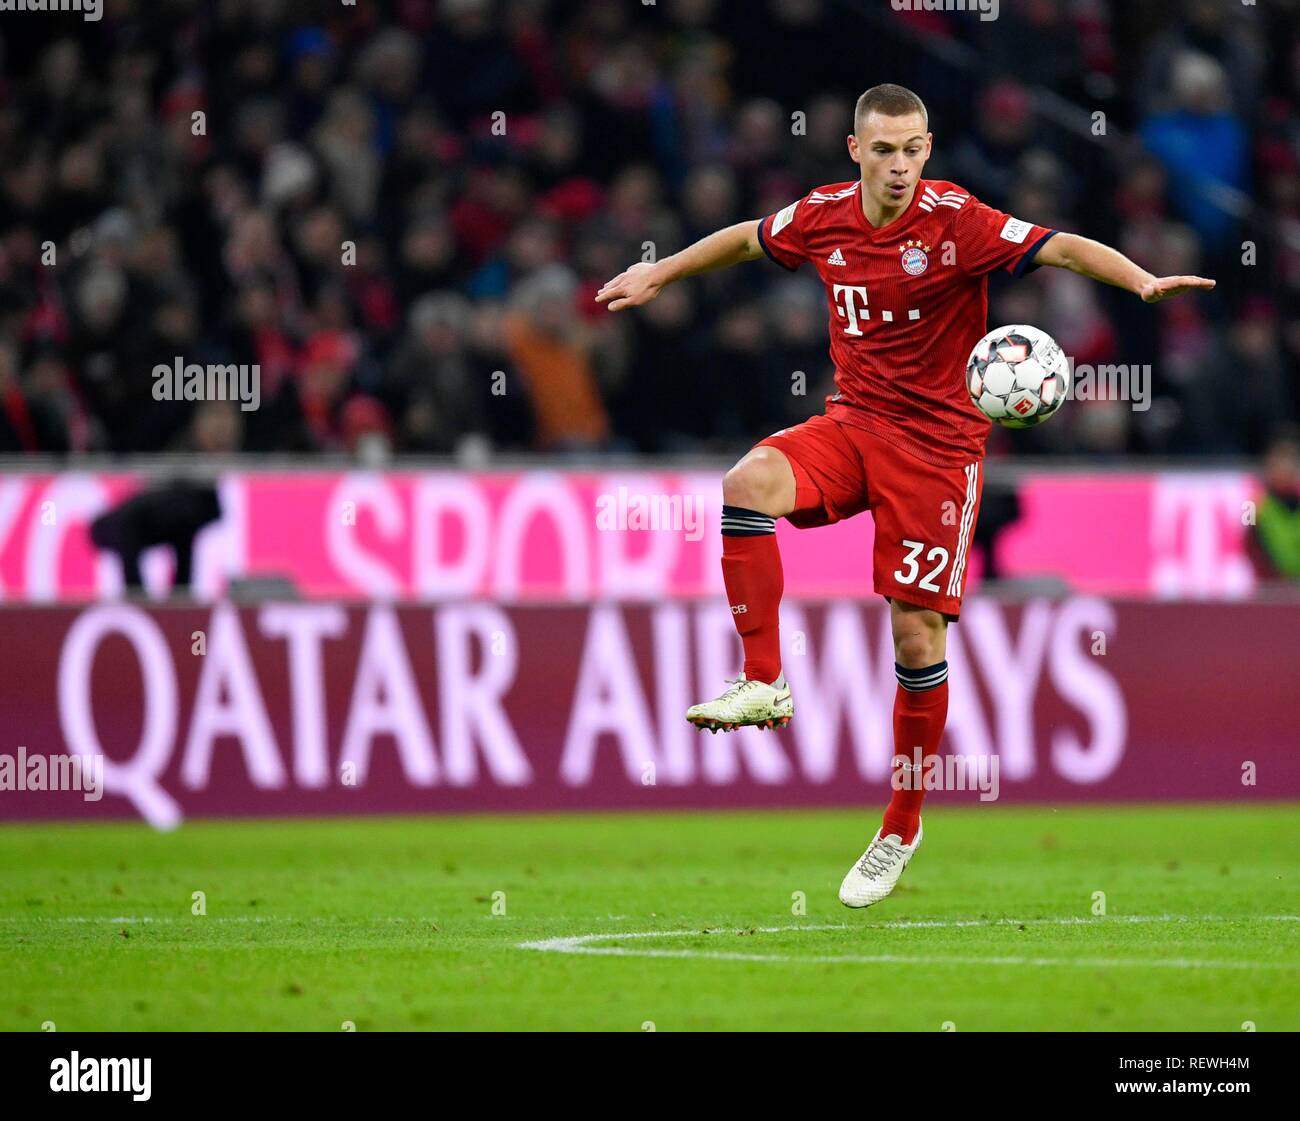 Joshua Kimmich FC Bayern Munich on the ball, Qatar Airways, Allianz Arena, Munich, Bavaria, Germany Stock Photo